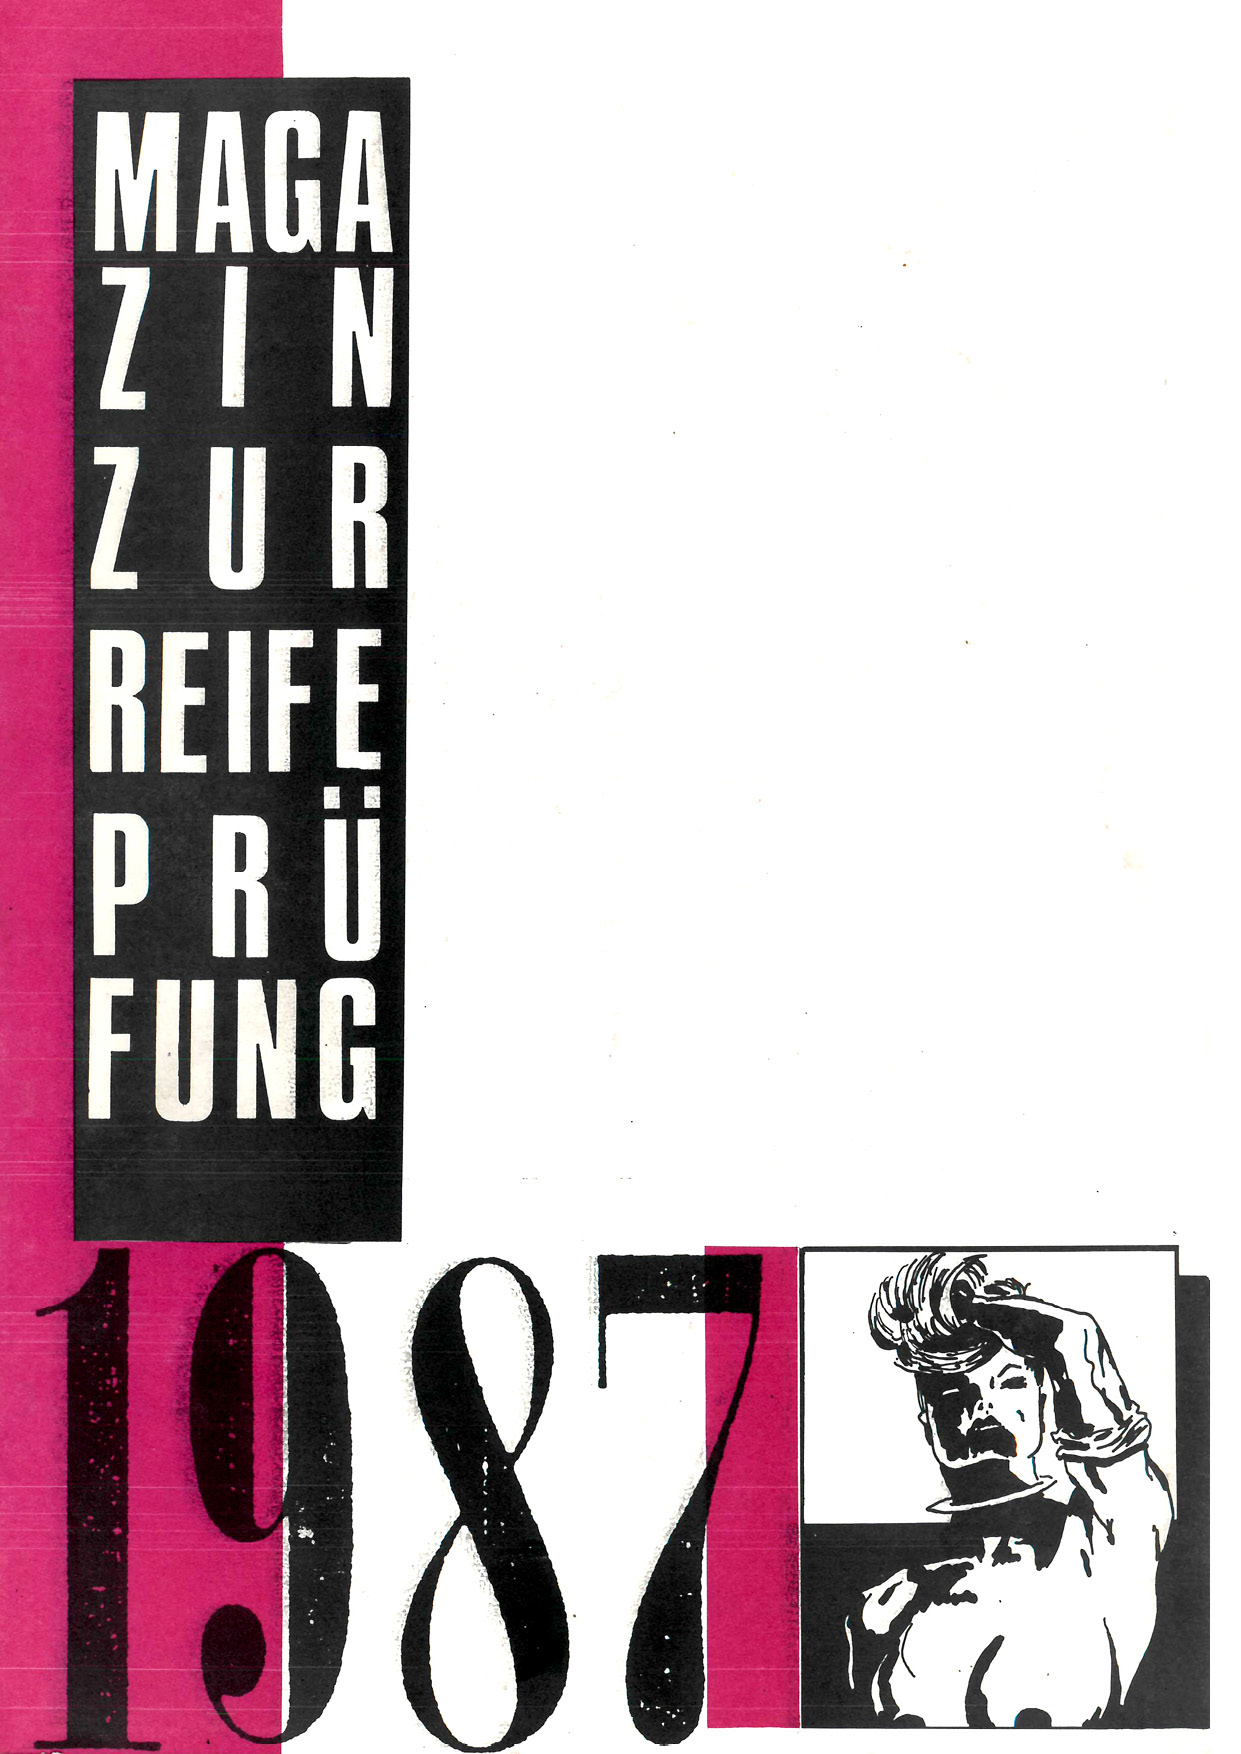 Abiturzeitung198701